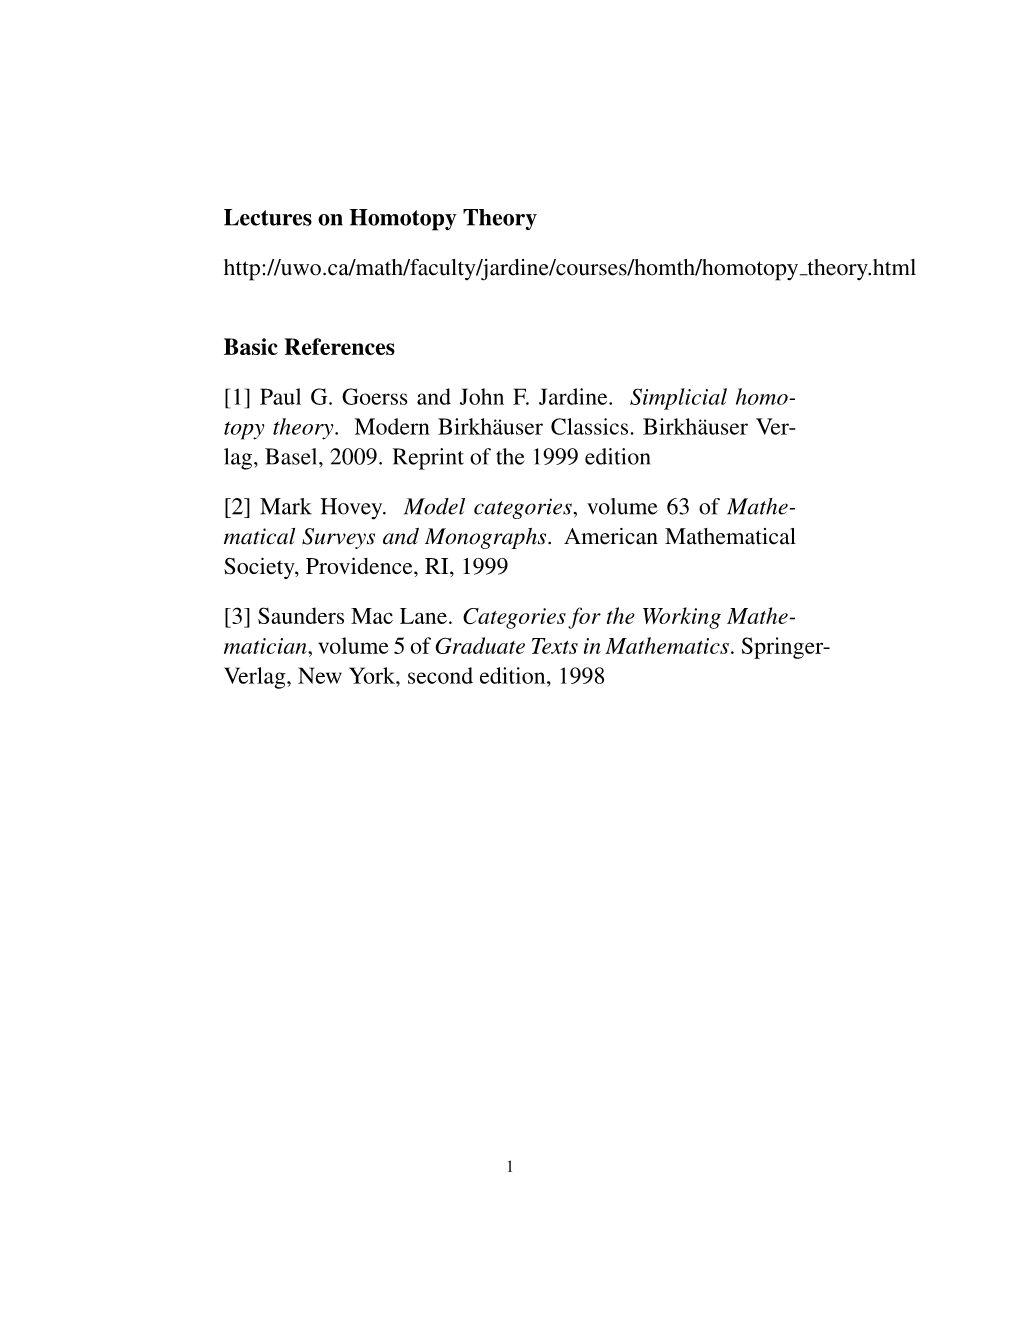 Lecture 01: Homological Algebra